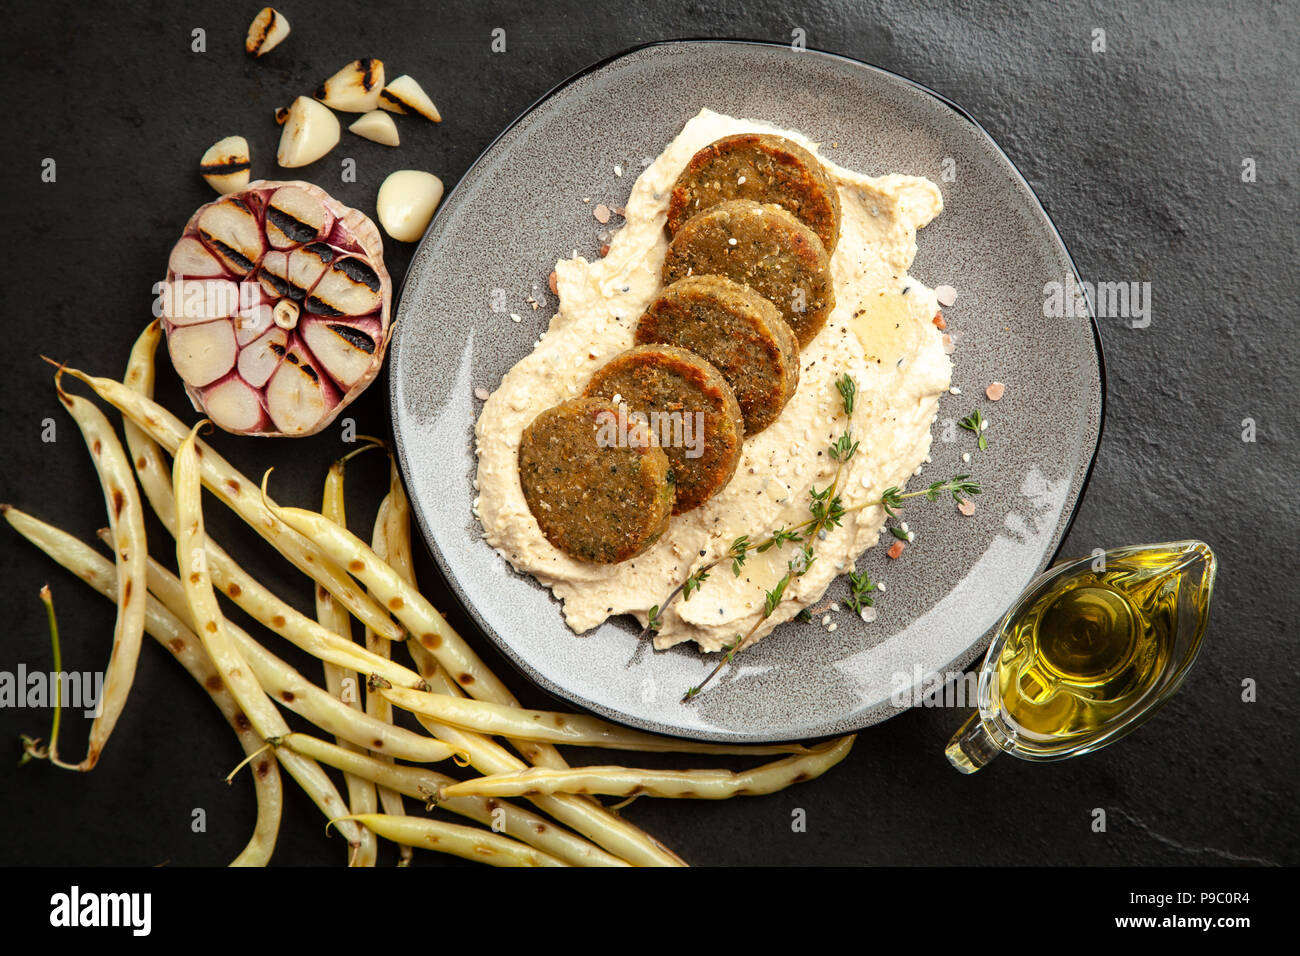 Falafel and hummus Stock Photo